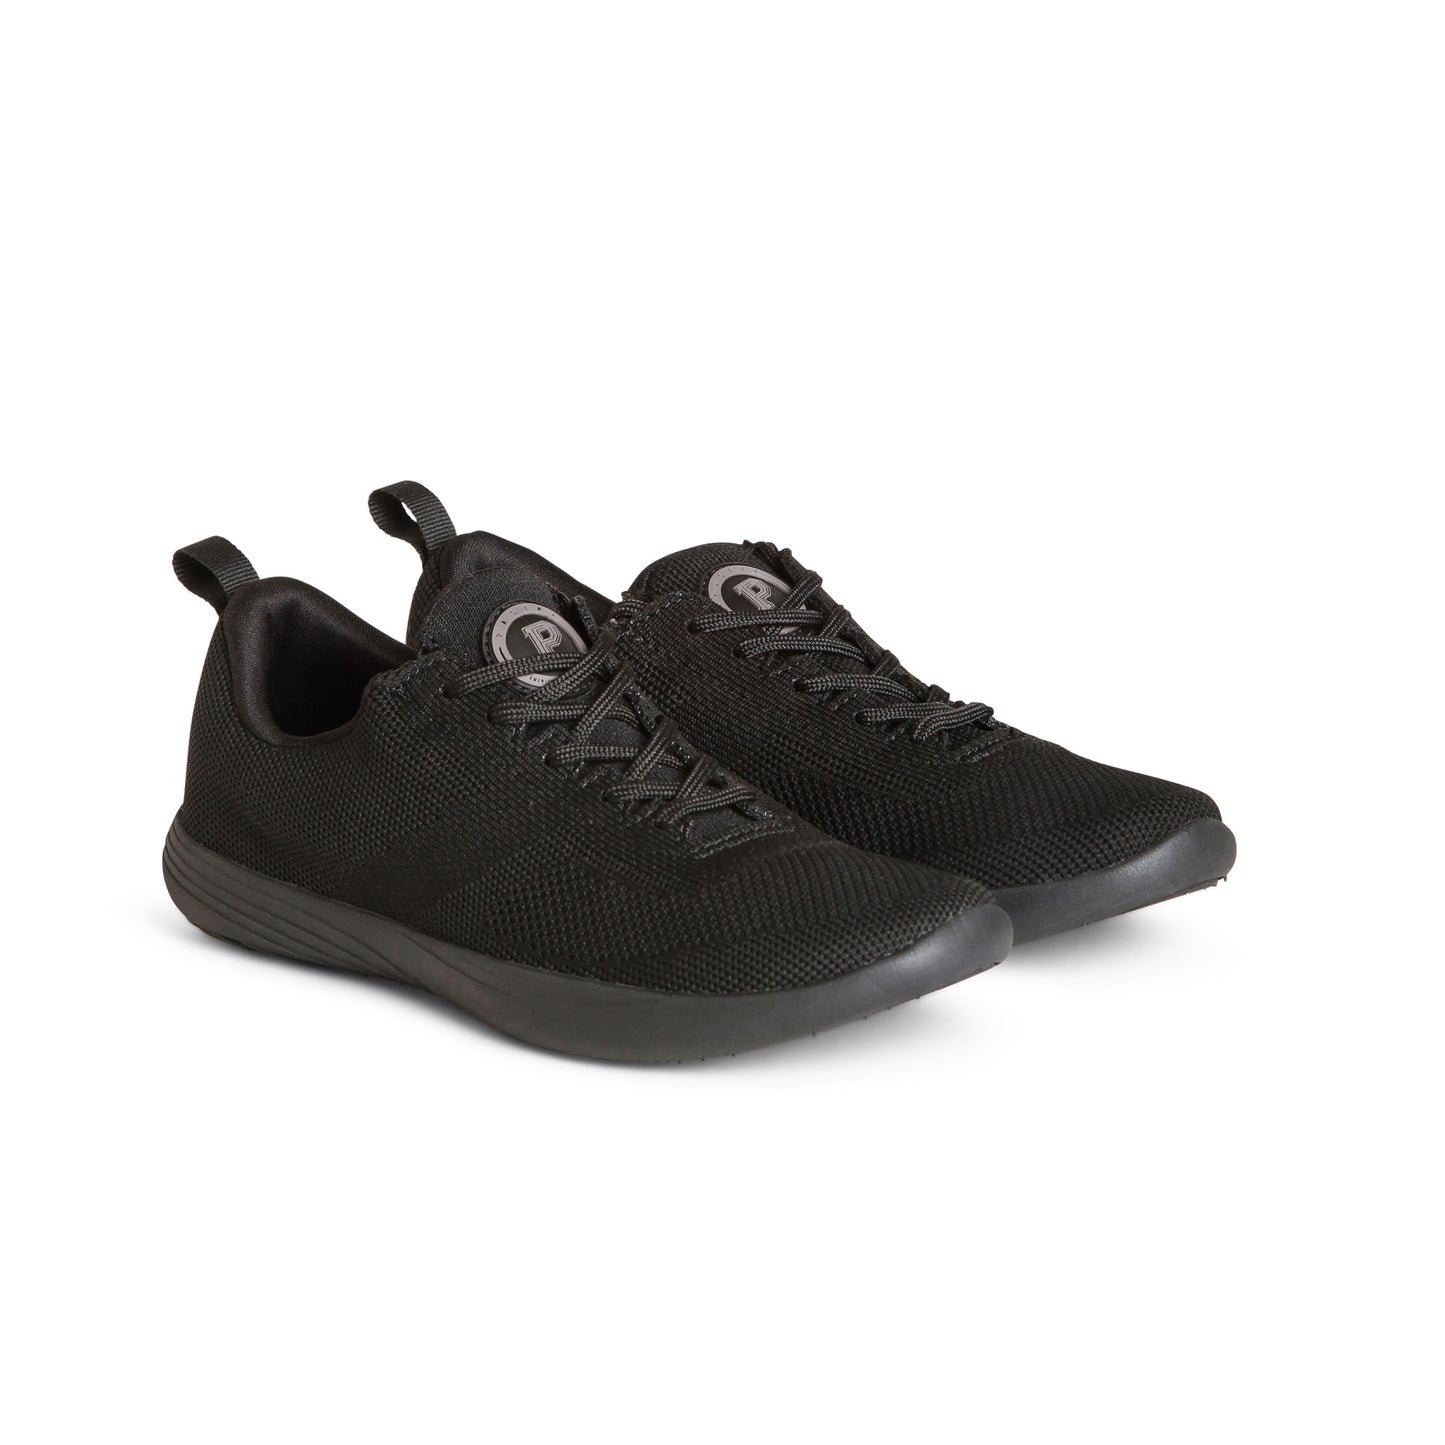 Pair of Pastry Studio TR2 Adult Women's Sneaker in Black/Black in 3 quarter view